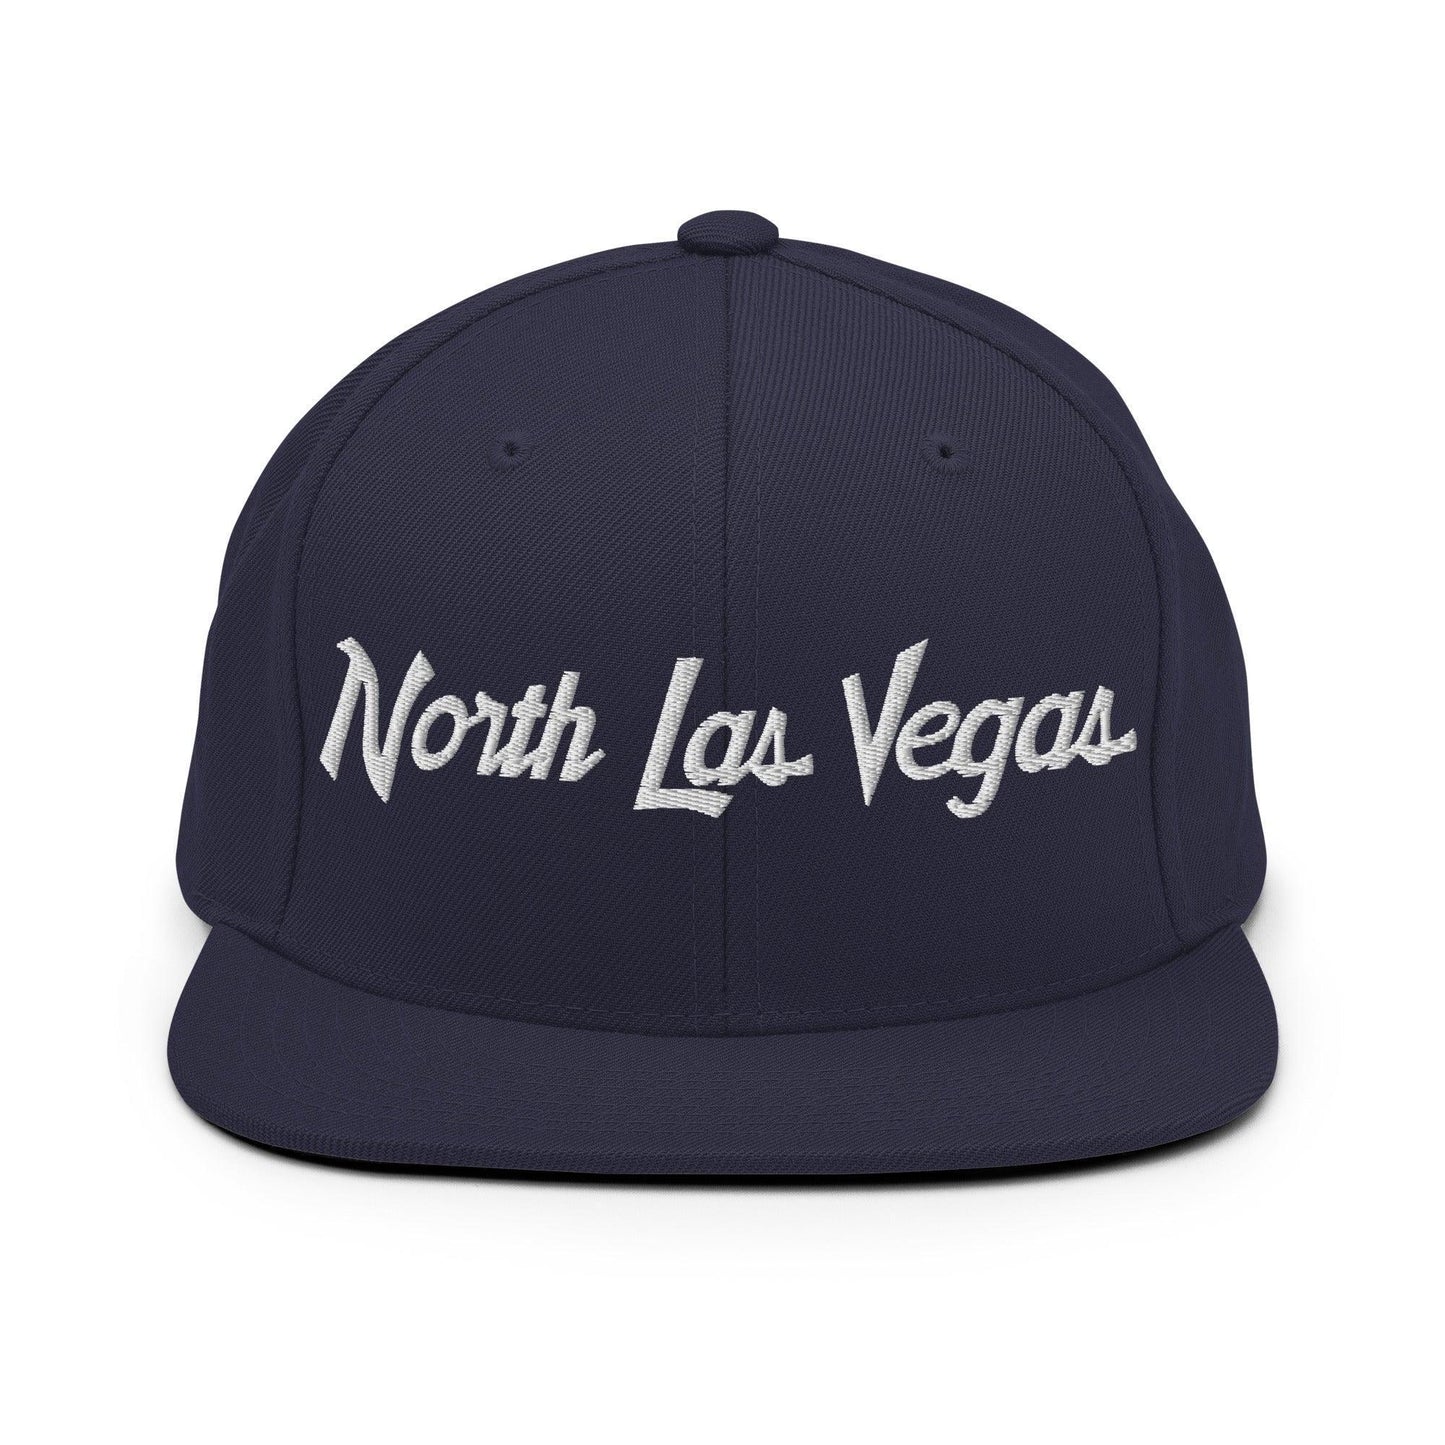 North Las Vegas Script Snapback Hat Navy